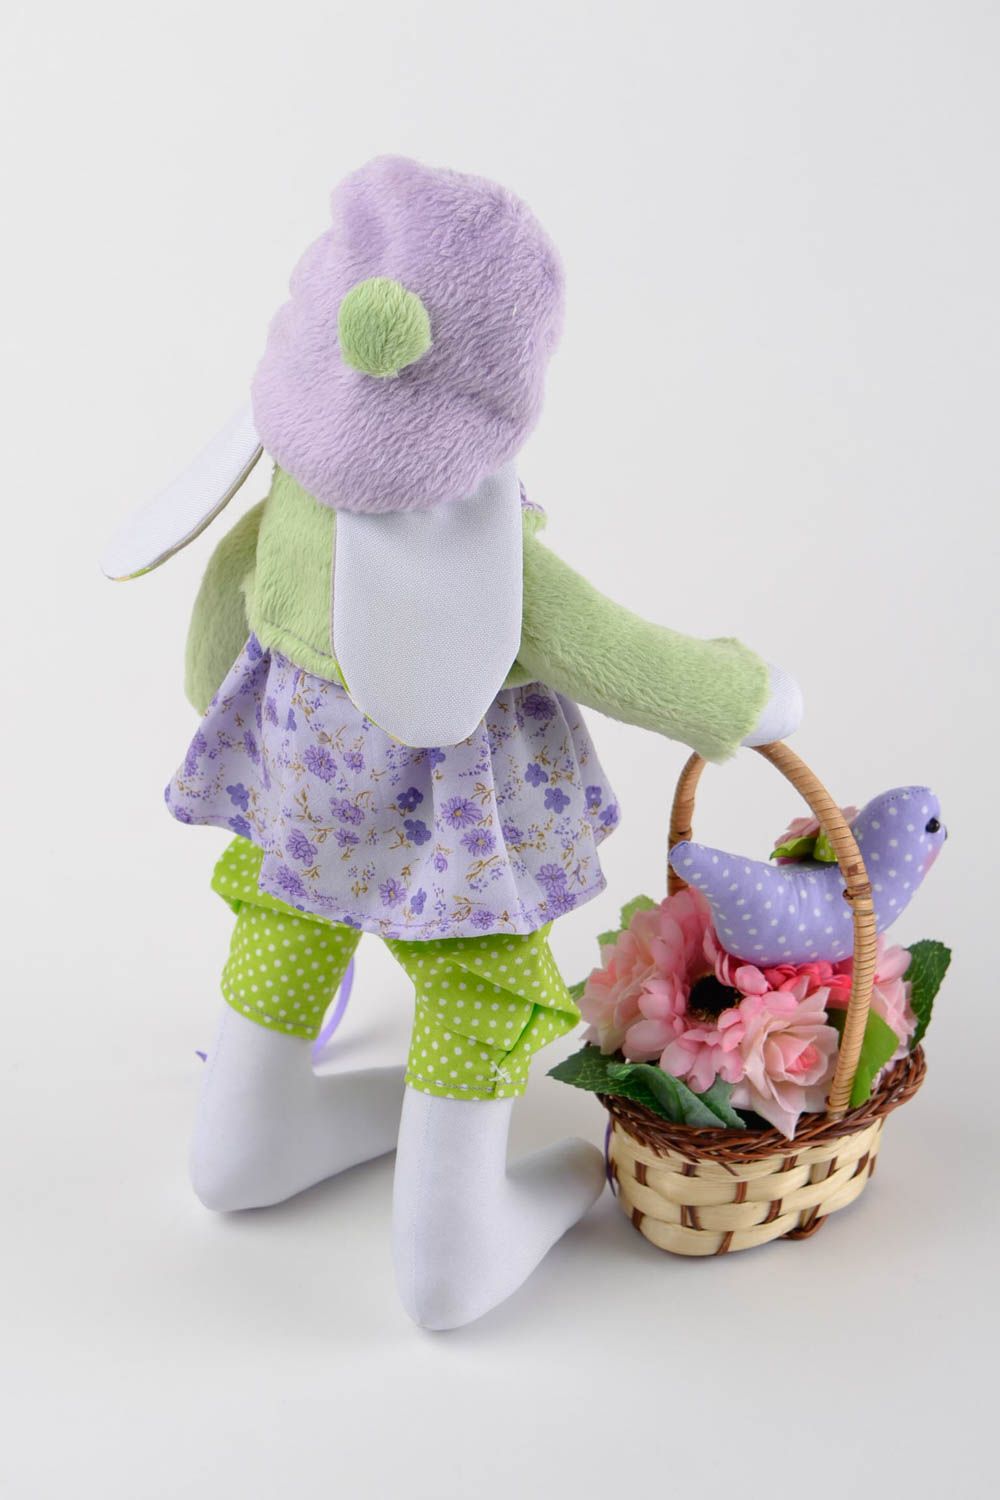 Handmade interior textile doll designer rag bunny toy present for children photo 5